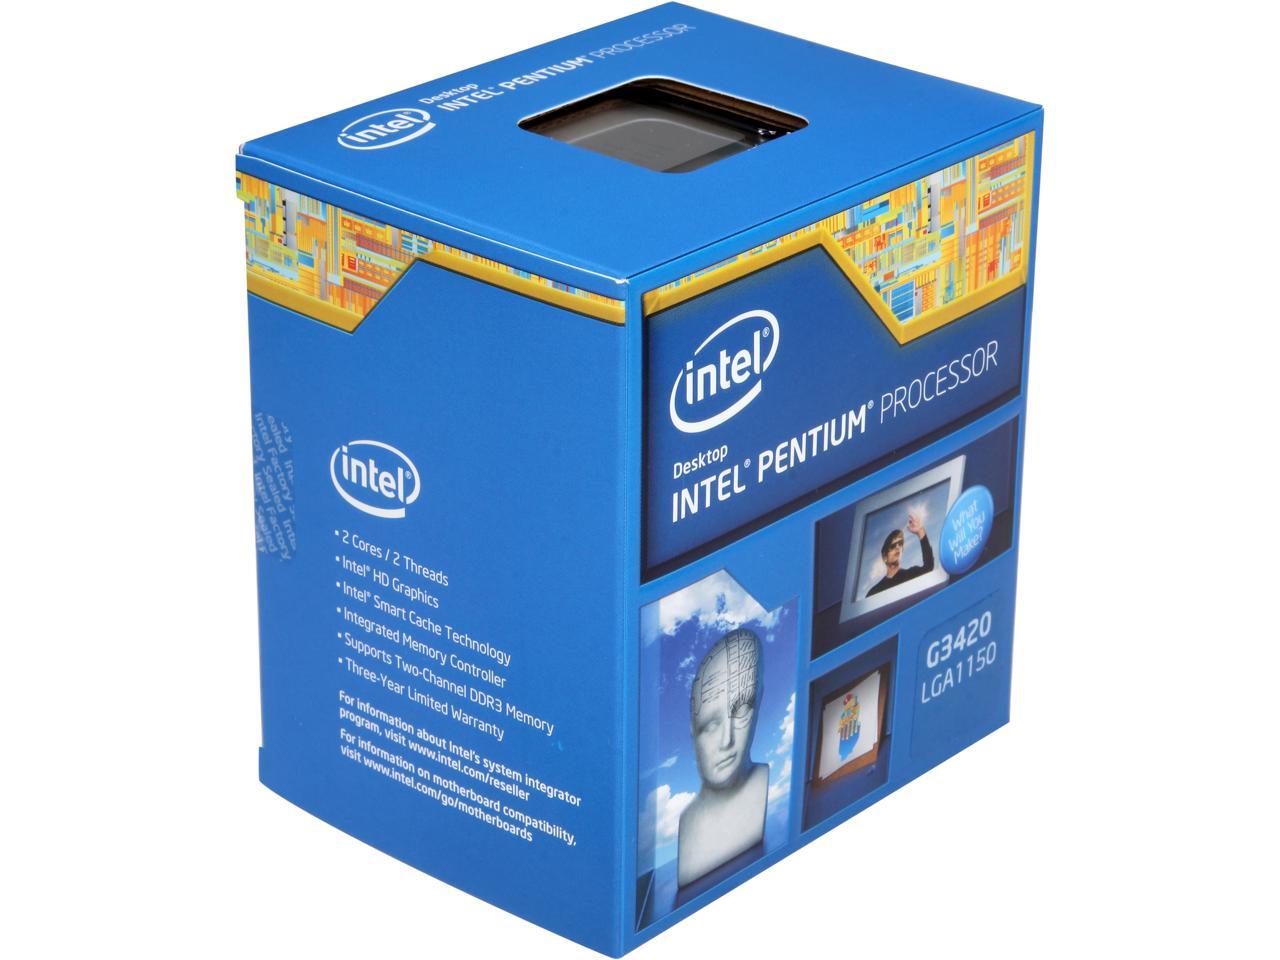 Intel revives Haswell-era Pentium G3420 - NotebookCheck.net News